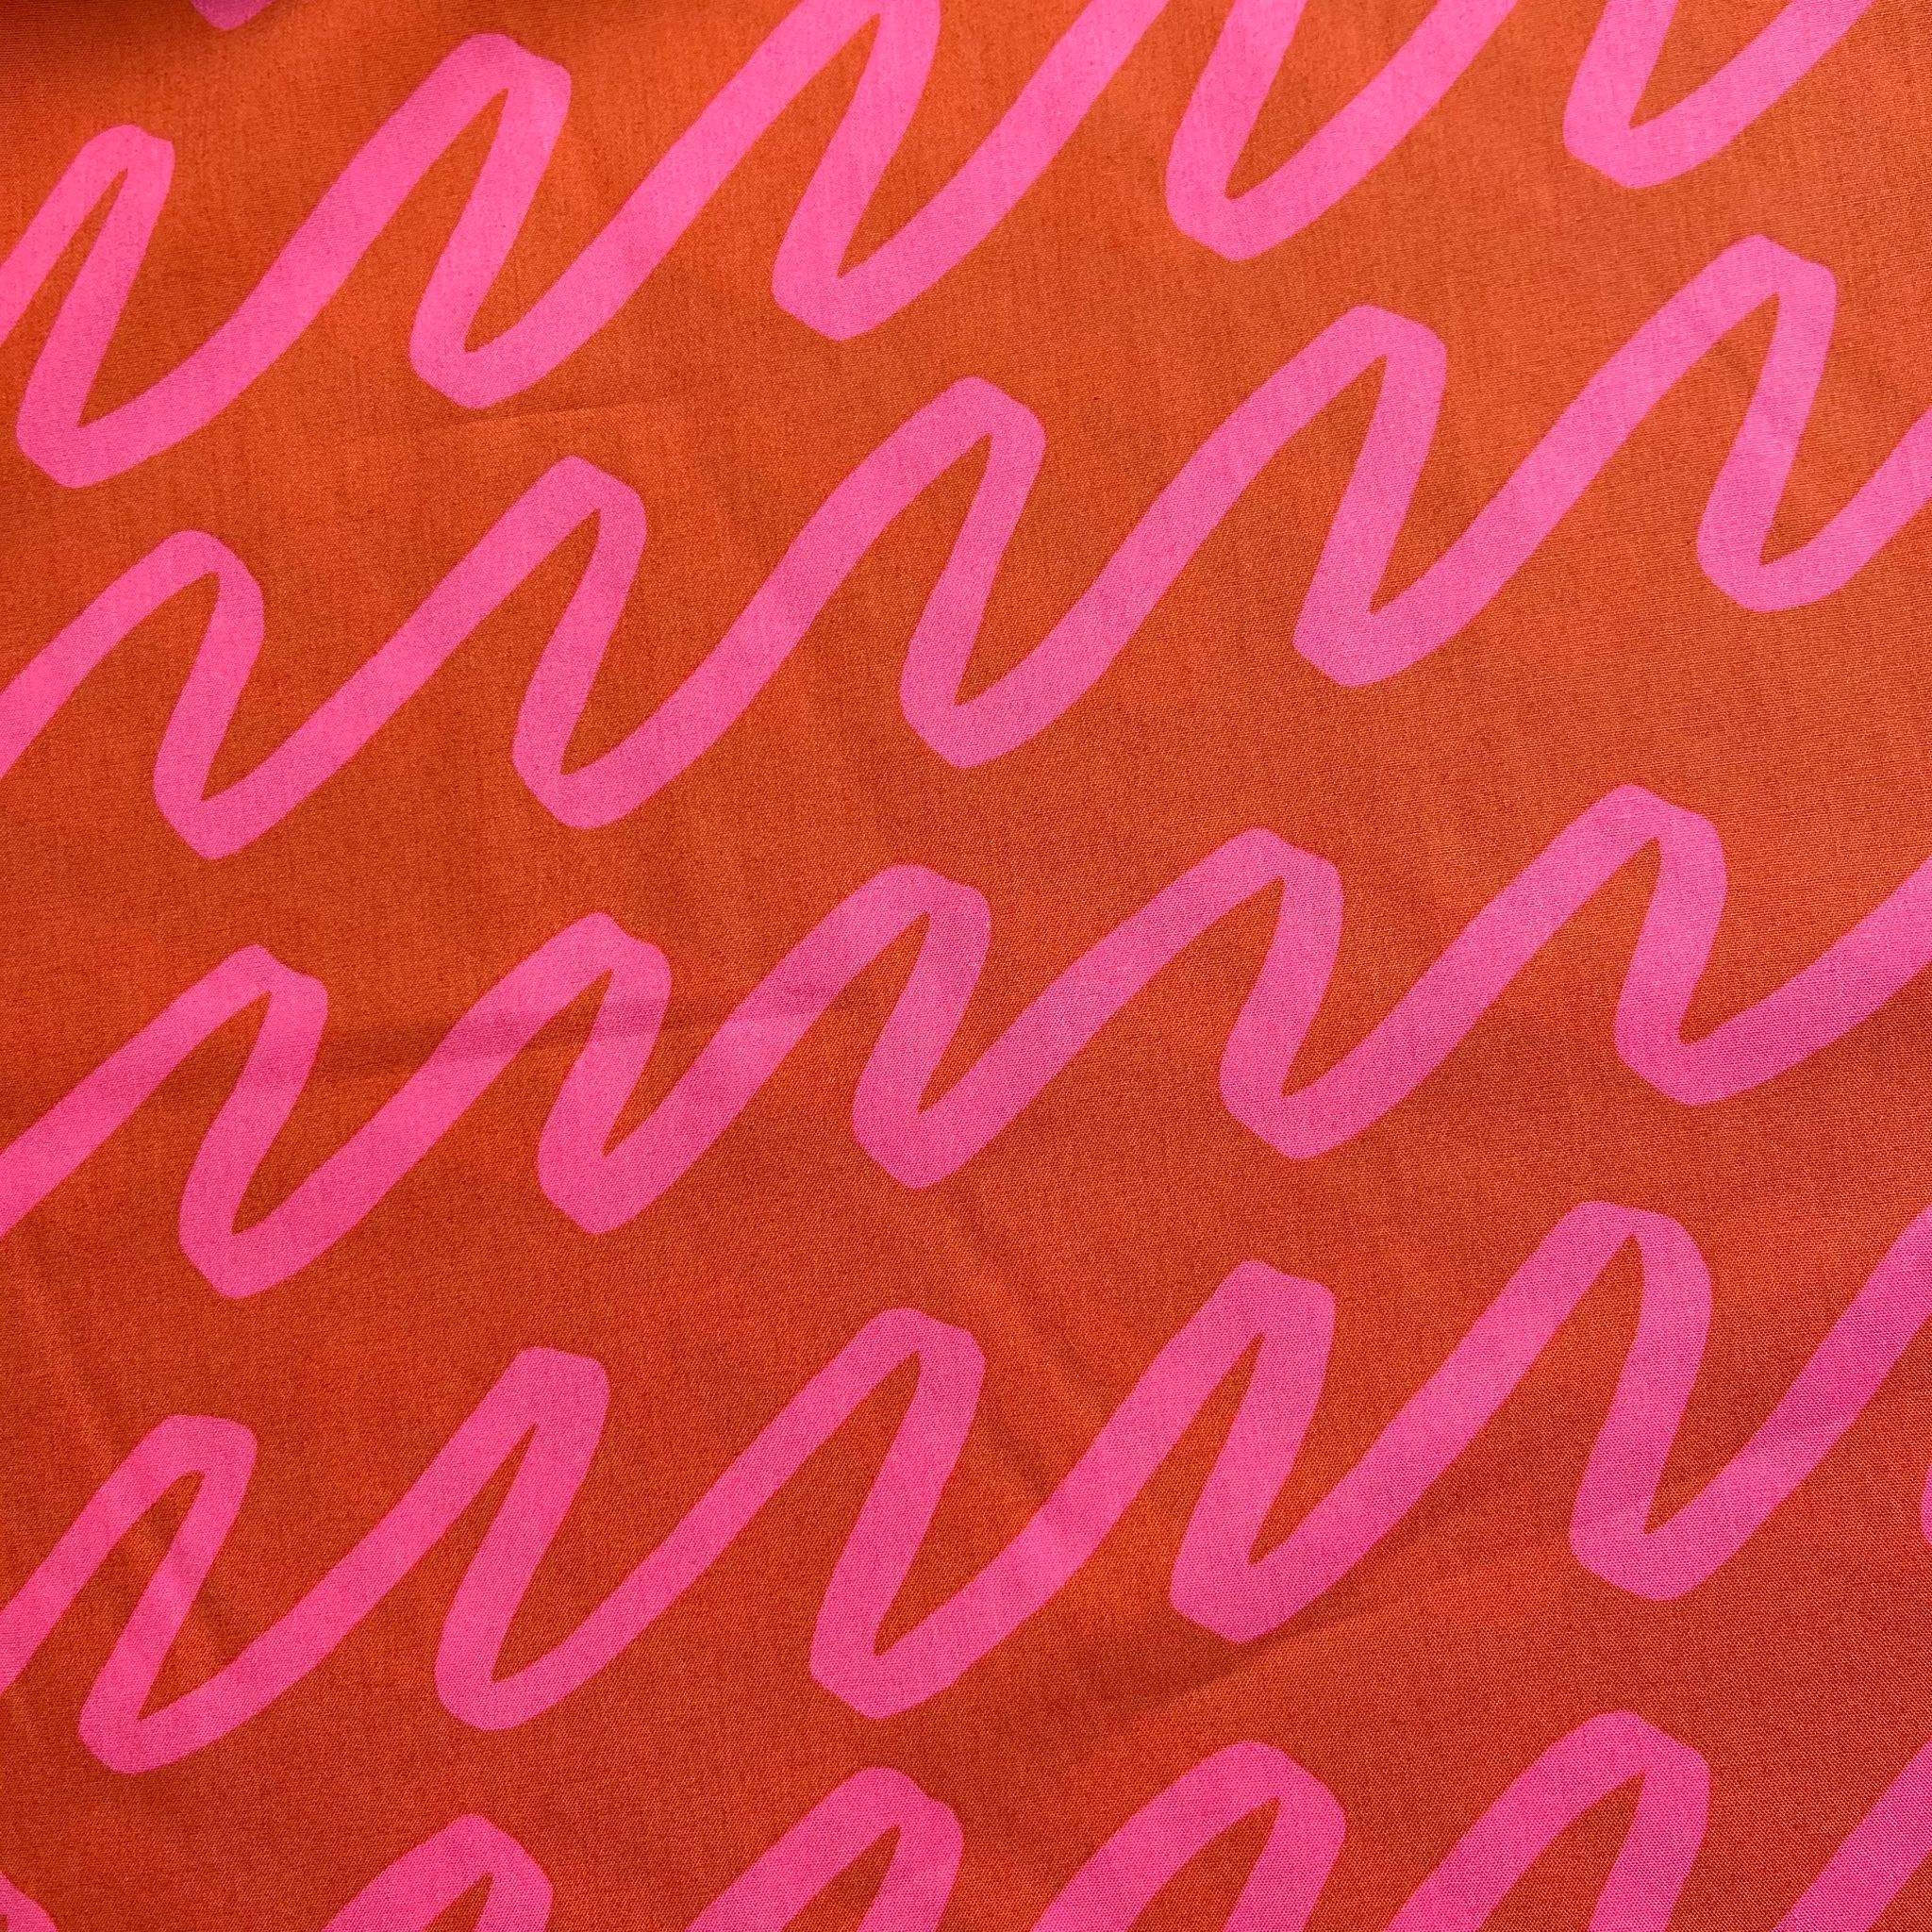 REMNANT 2.08 Metres - Nerida Hansen - Making Waves Rust Cotton Poplin Fabric